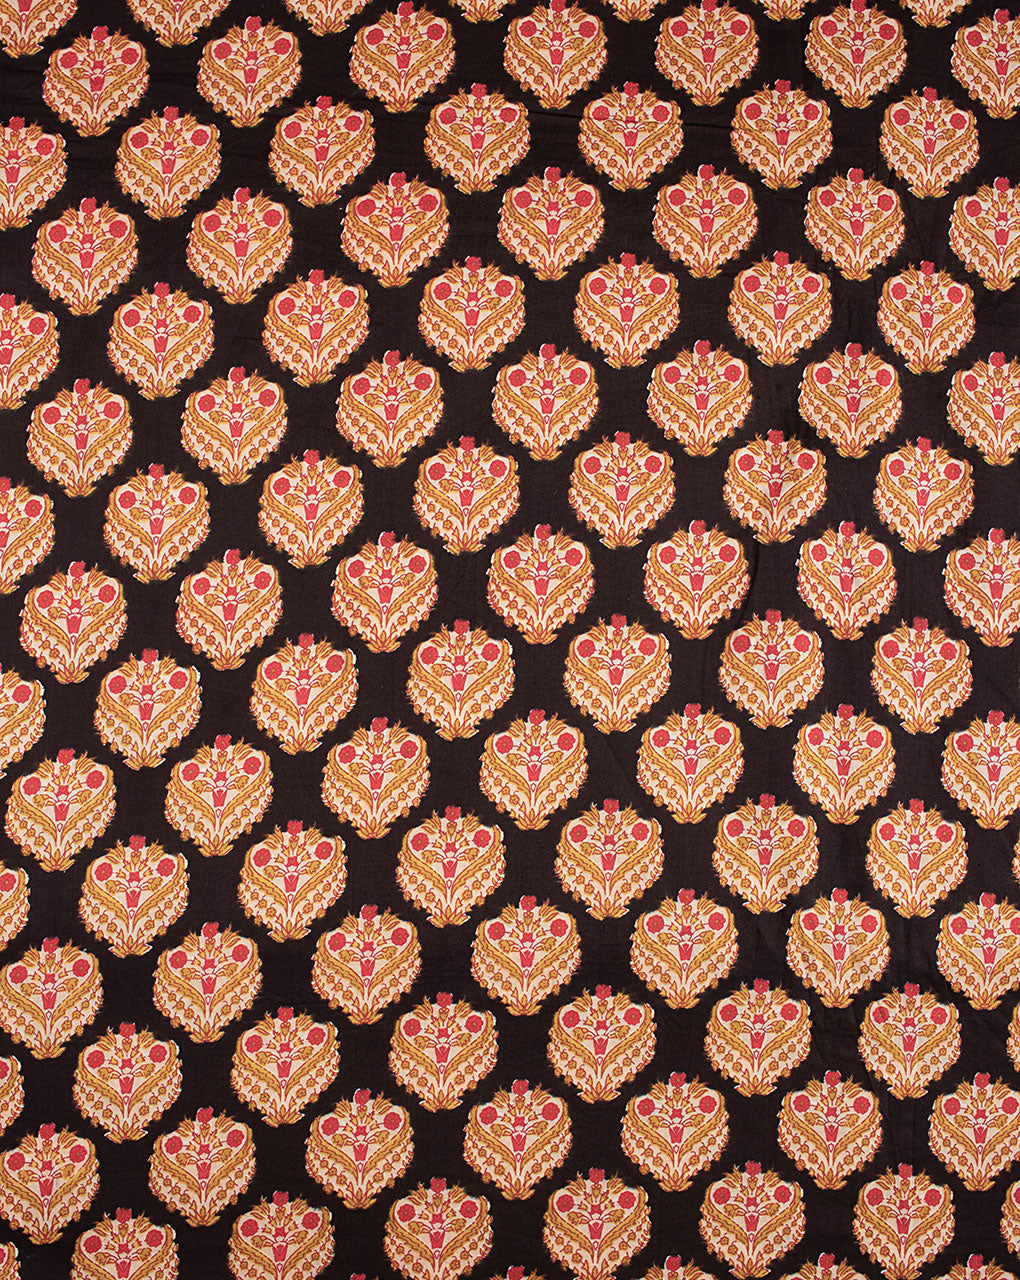 Boota Screen Print Cotton Fabric - Fabriclore.com